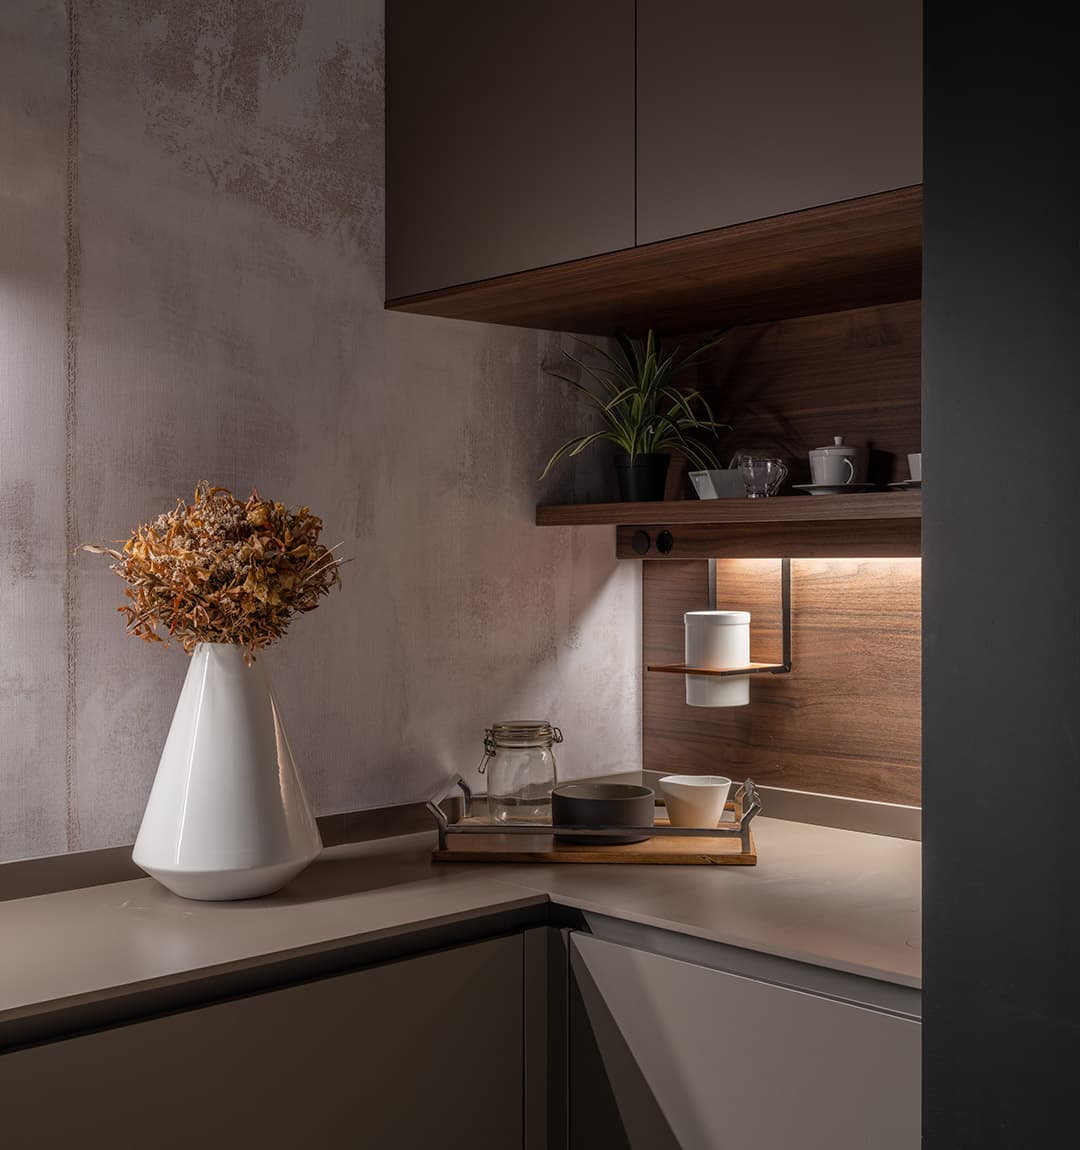 Grey Santos kitchen with lighting system